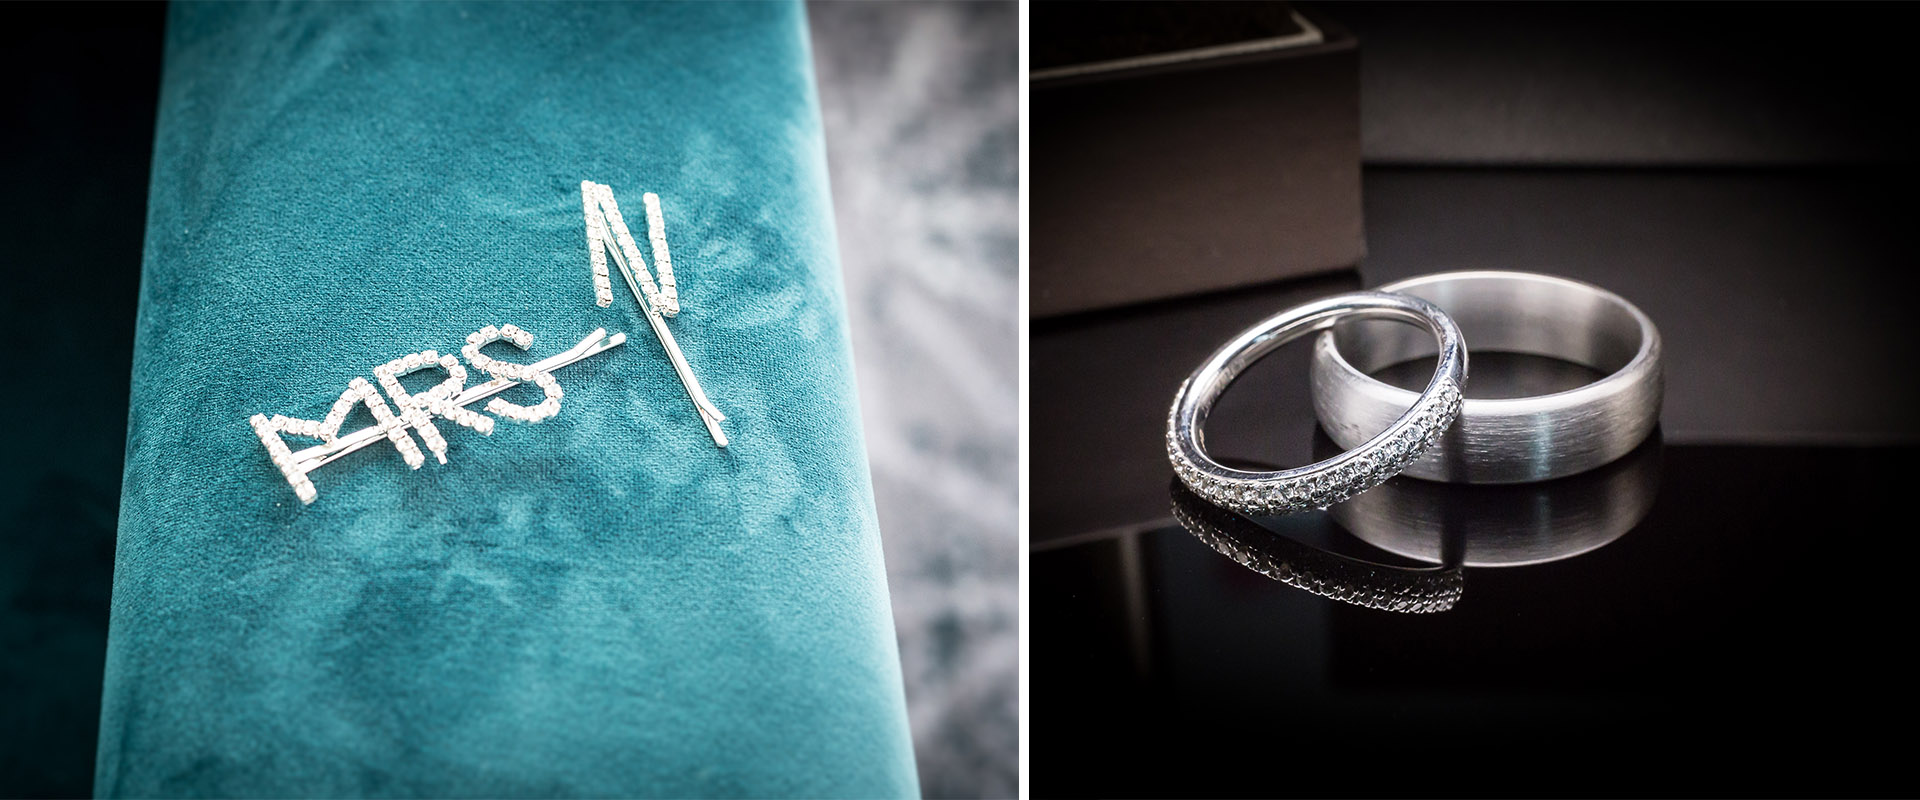 Wedding broach and wedding ring detail